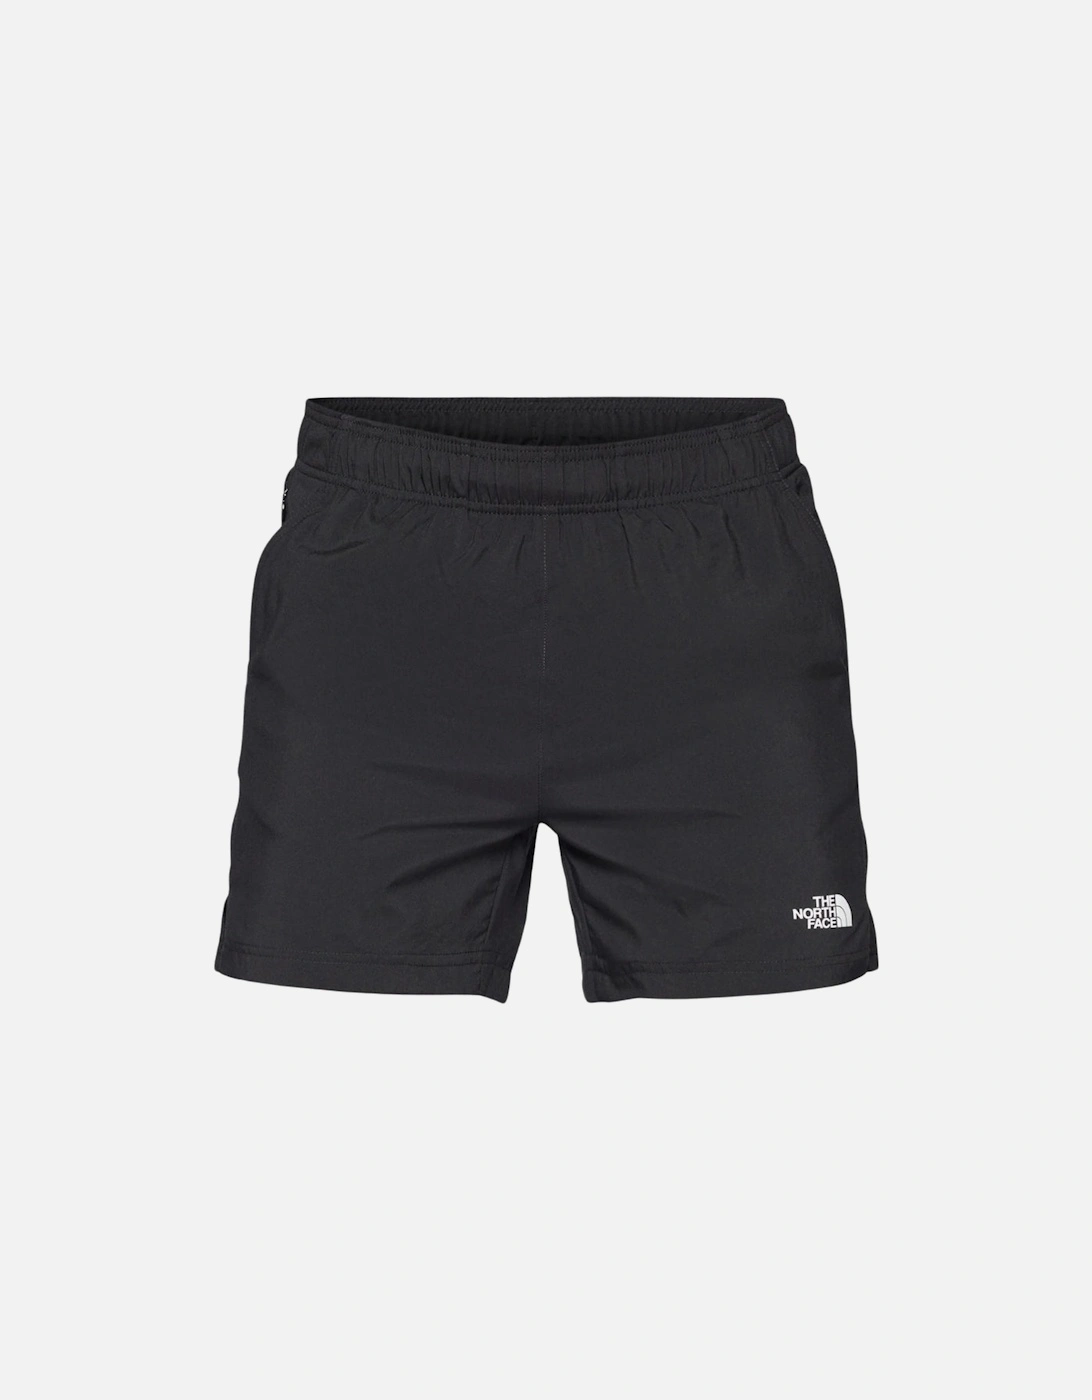 North Face 24/7 5" Shorts - Black, 3 of 2